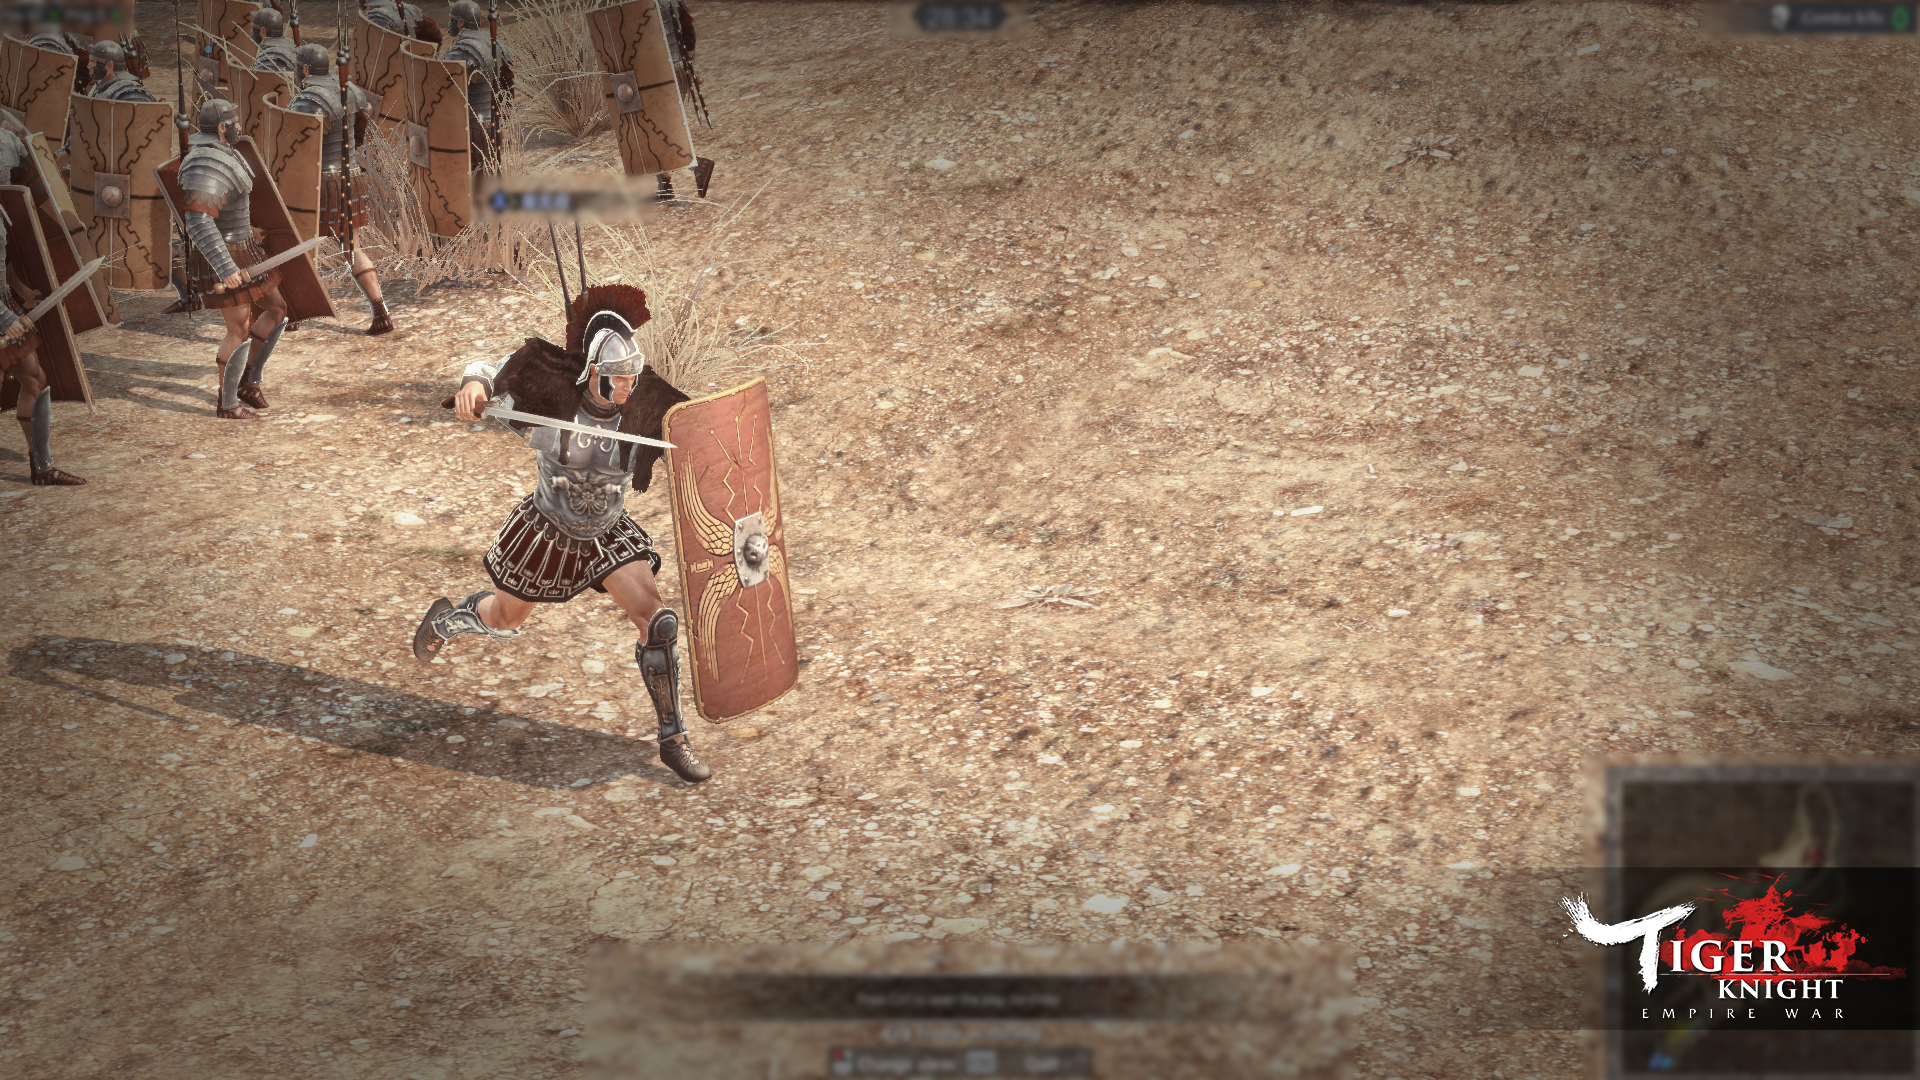 Tiger Knight Empire War - Rome Macrinus Pack screenshot